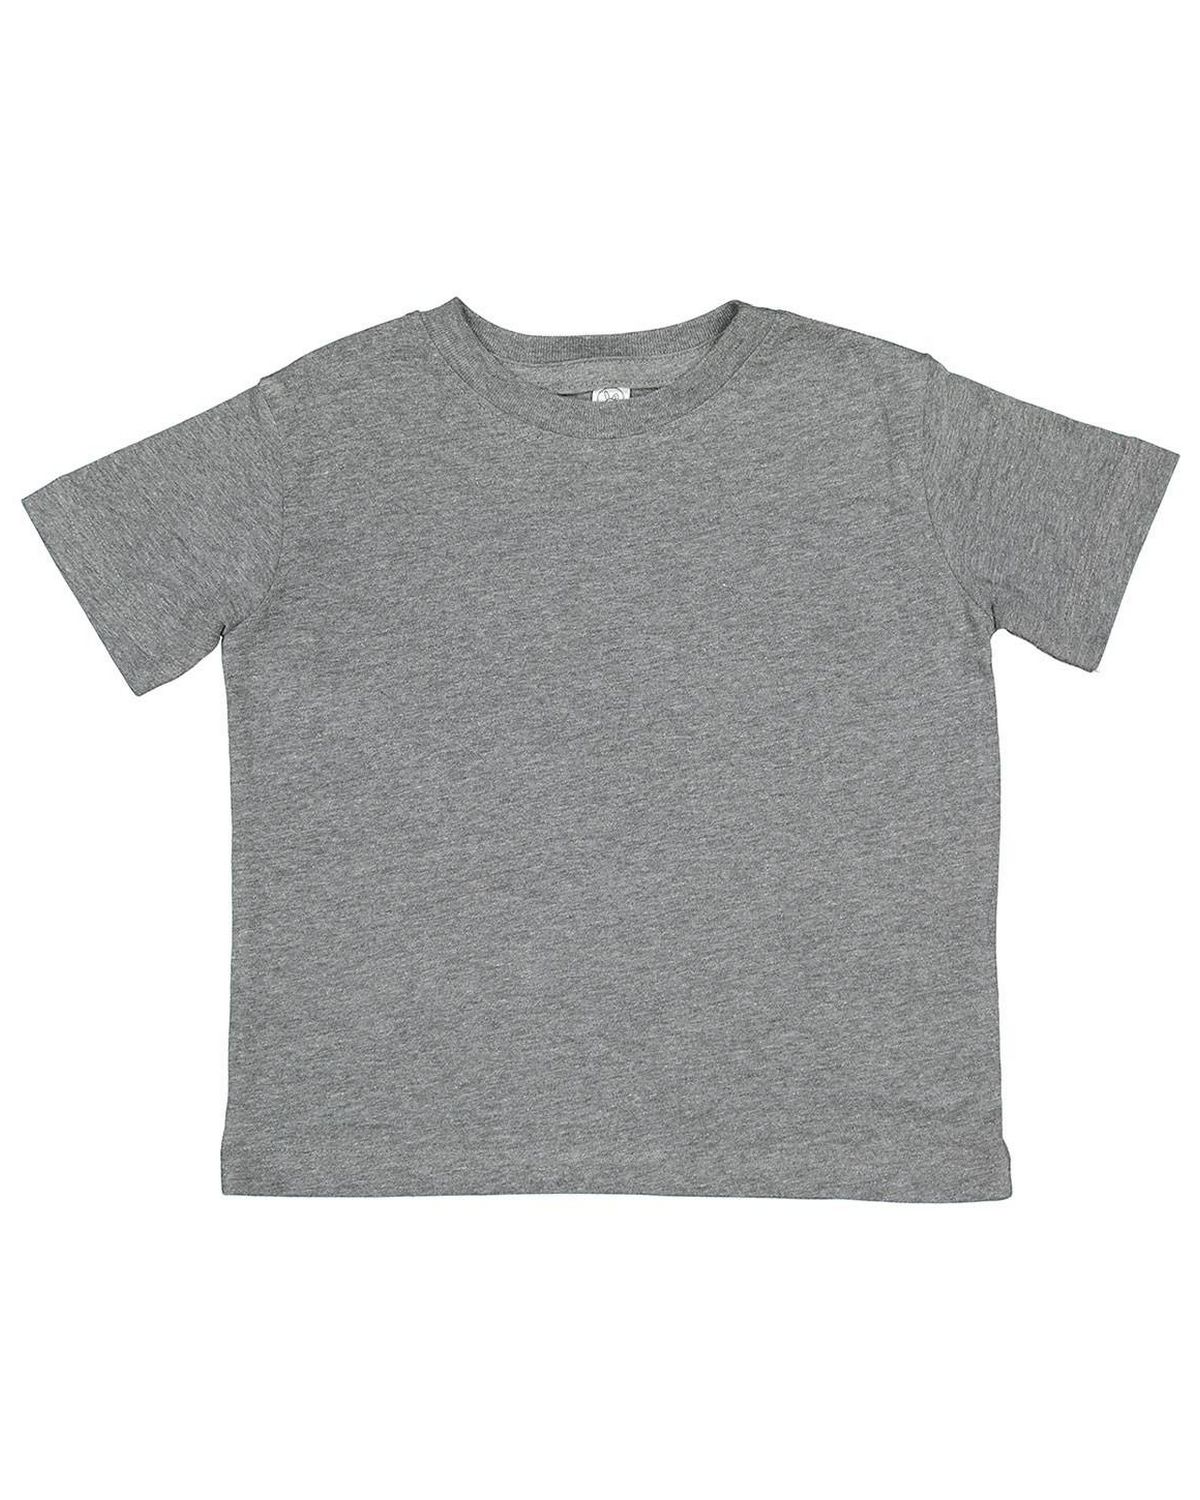 Rabbit Skins 3321 Toddler 4.5 oz. Fine Jersey T-Shirt - ApparelnBags.com